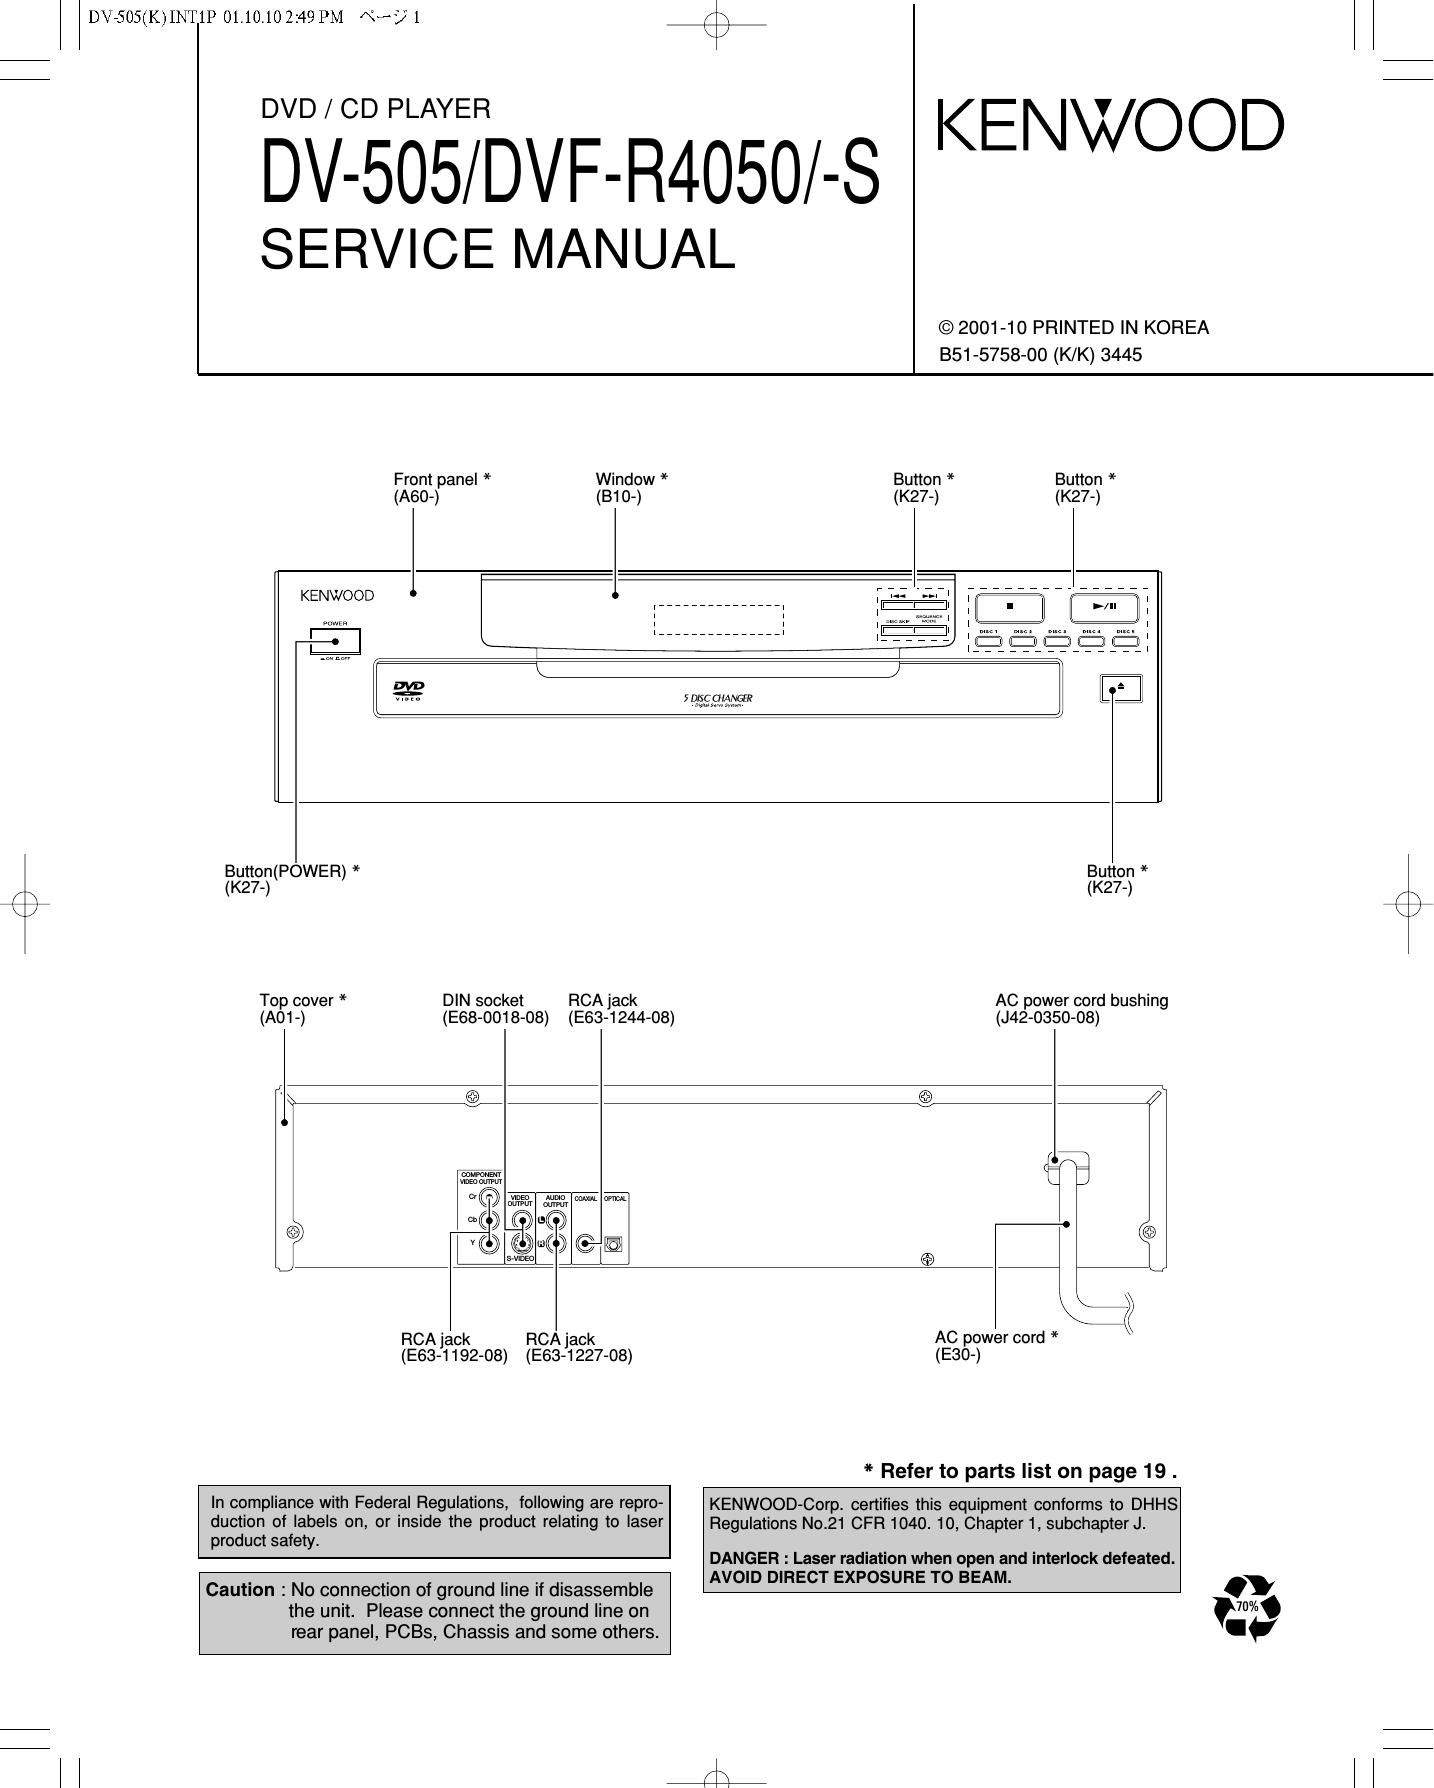 Kenwood DVFR 4050 S Service Manual